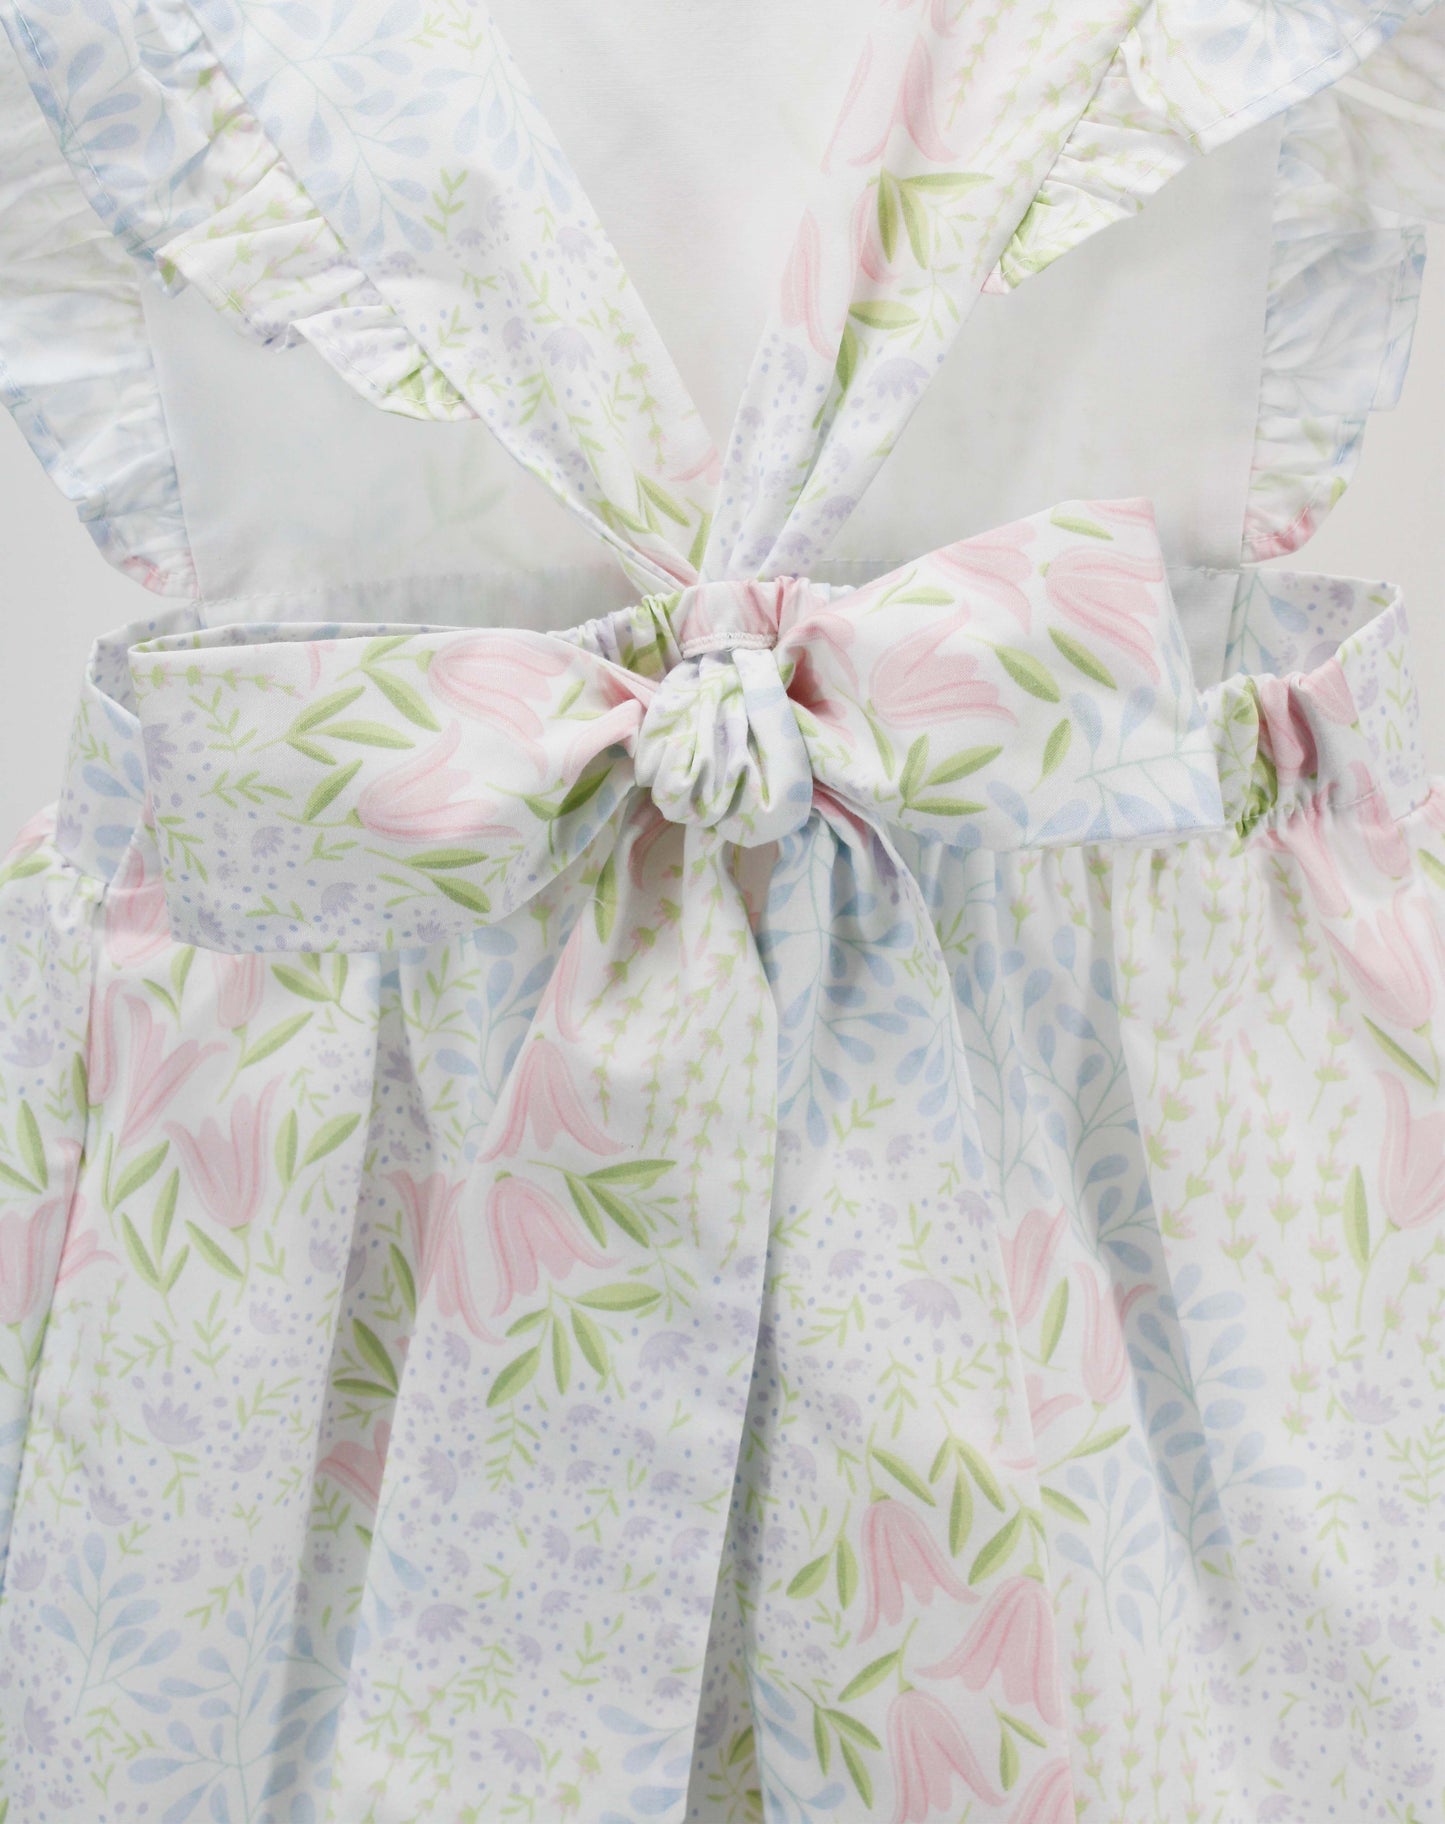 Adorable Garden Gisselle Dress